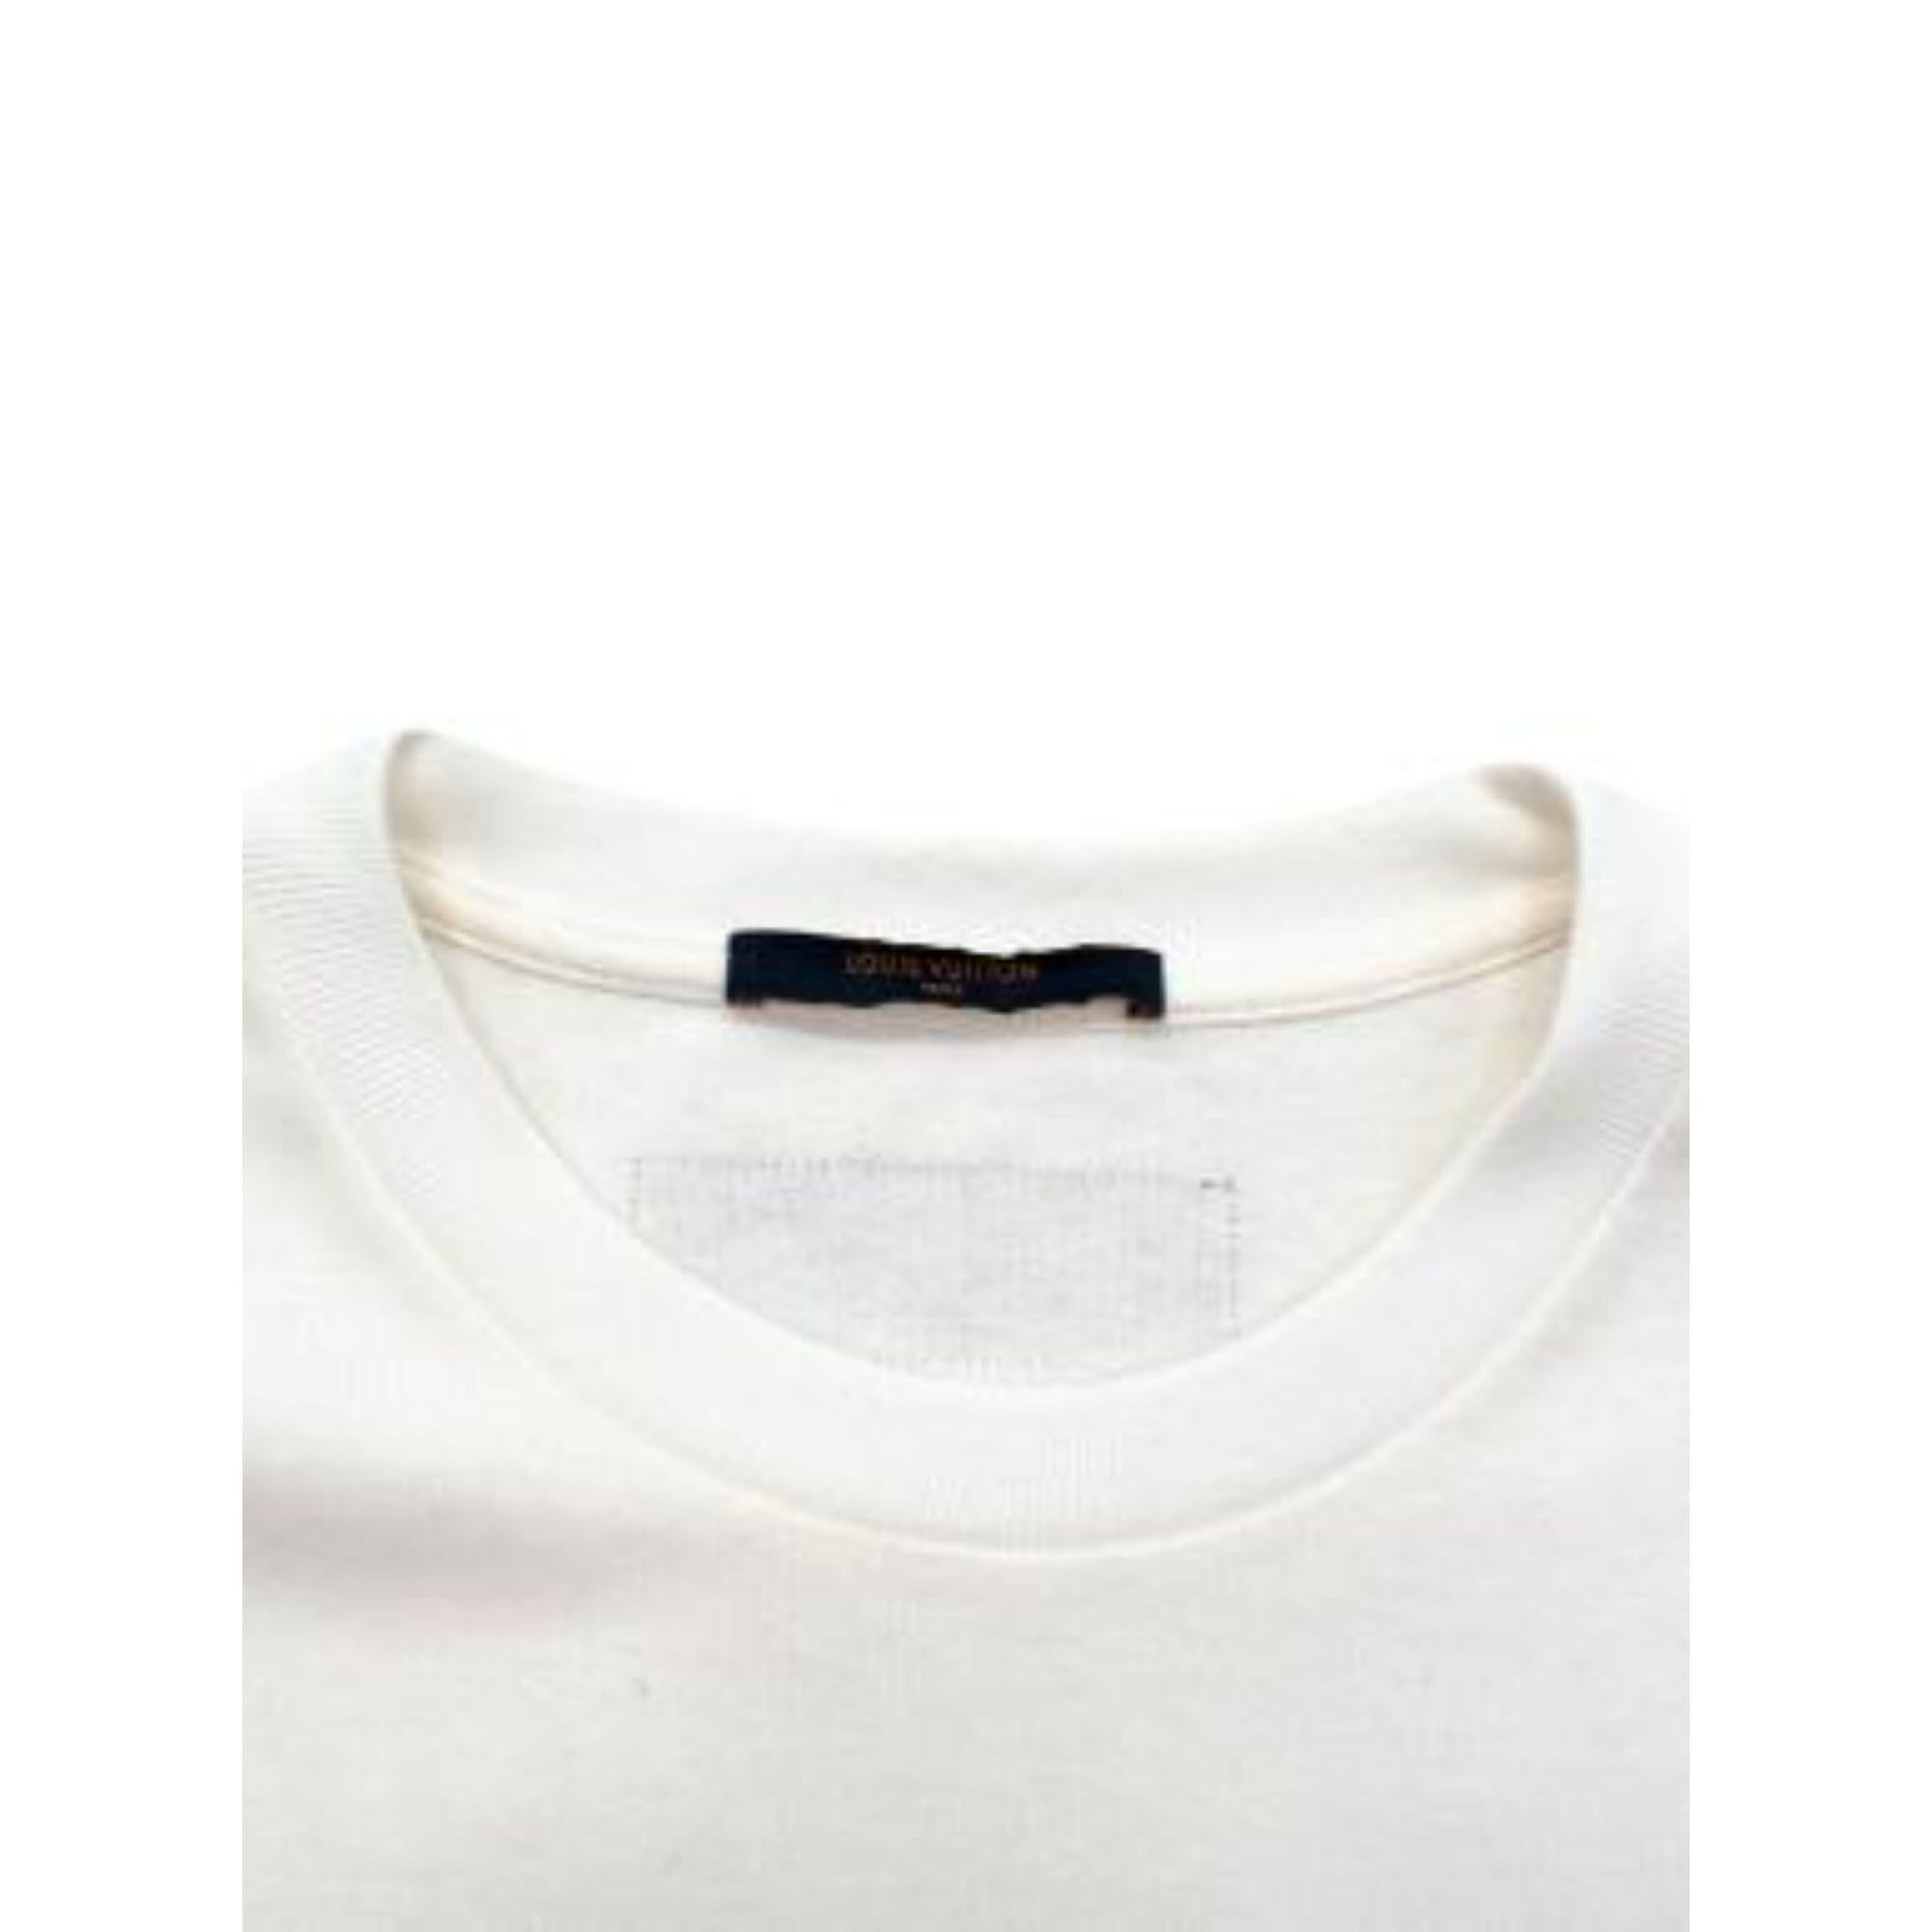 Louis Vuitton Tourist vs Purist Cotton T-shirt In Excellent Condition For Sale In London, GB